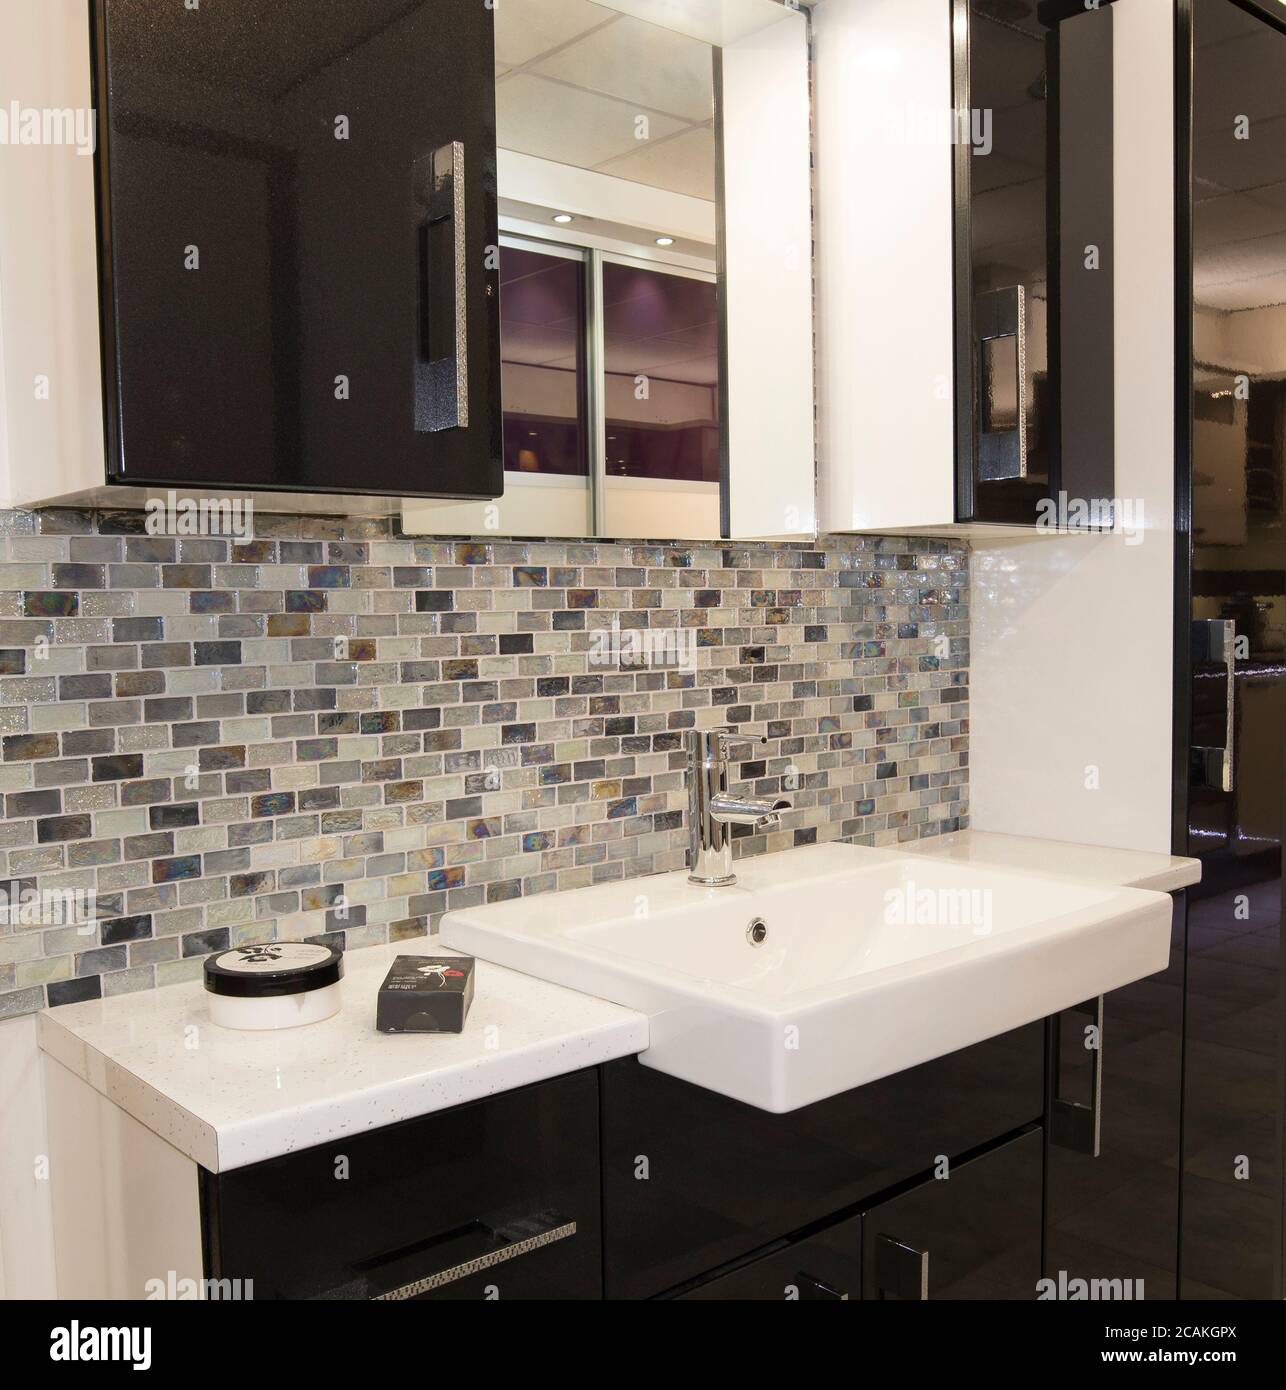 Modern bathroom basin and splash back tiledwall Stock Photo